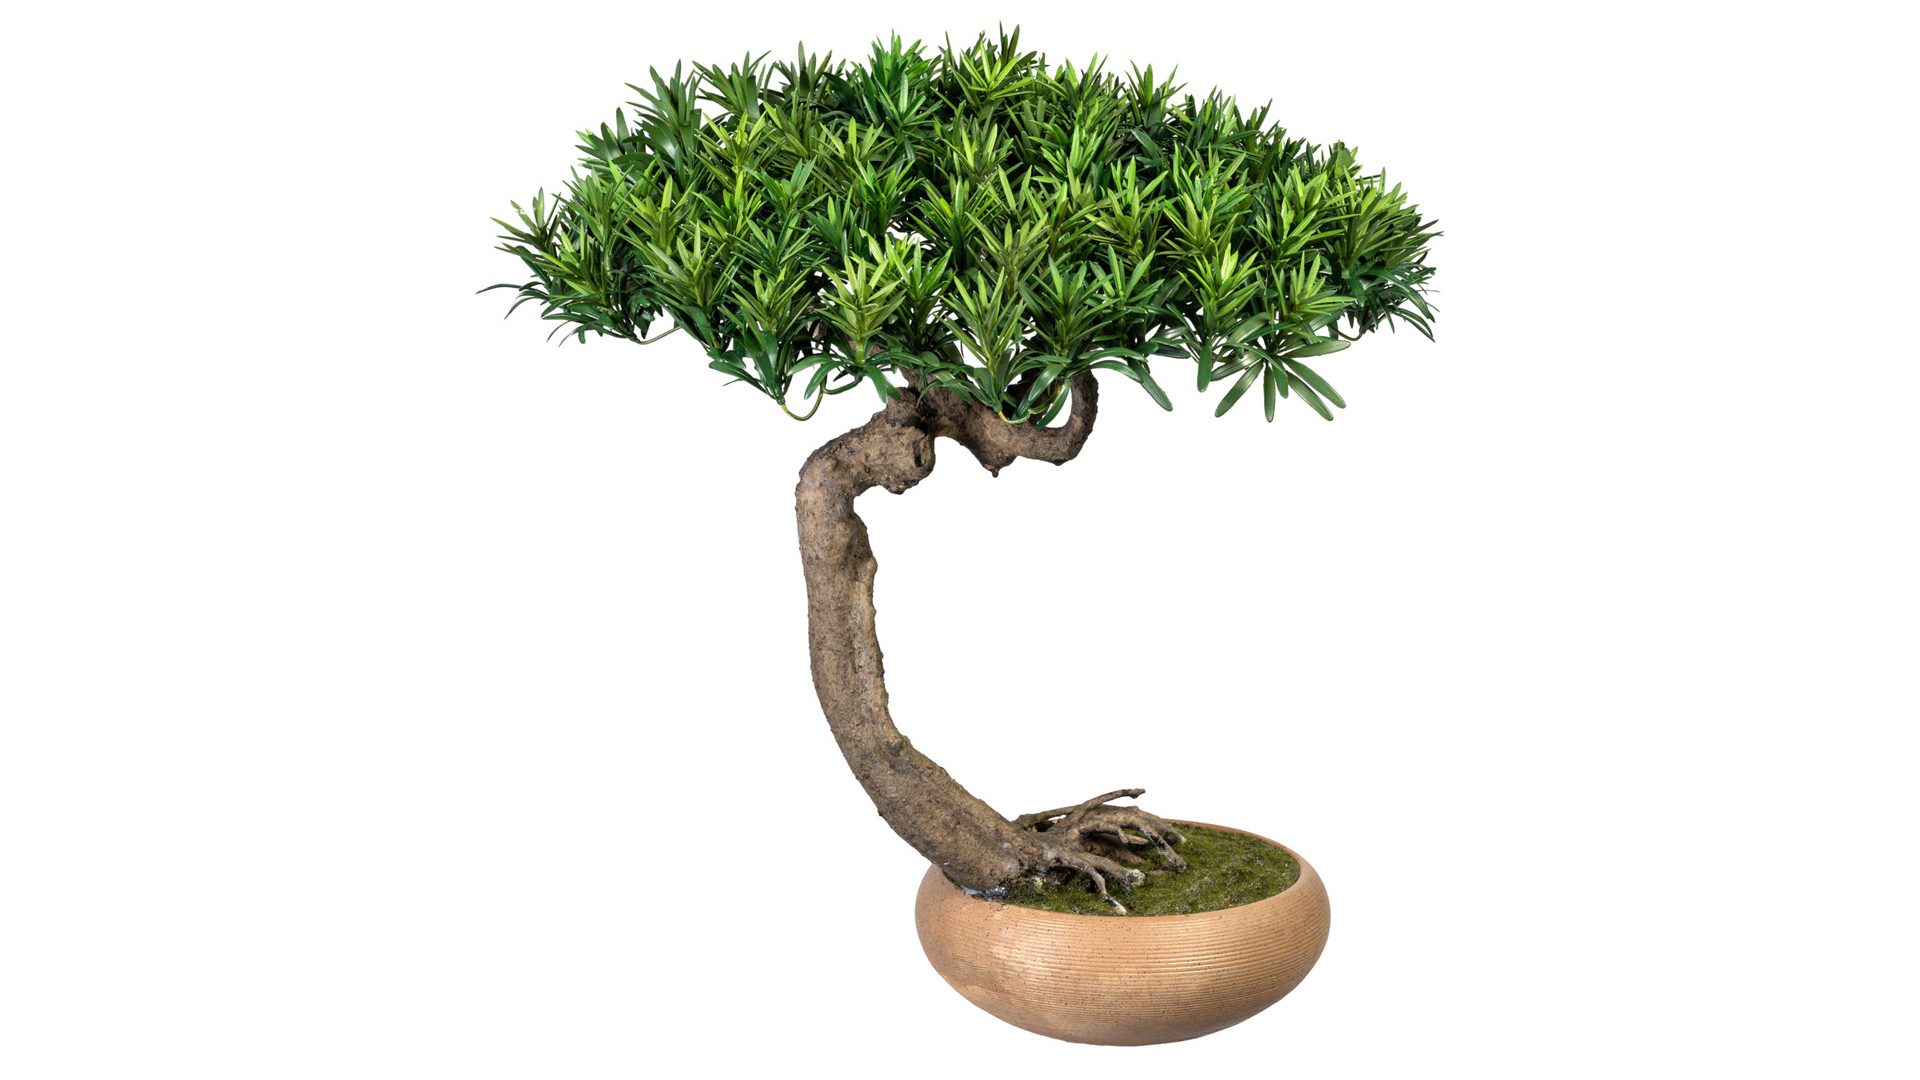 Pflanze Gasper aus Kunststoff in Grün Bonsai Podocarpus Shankan grüner Kunststoff & braune Keramikschale – Höhe ca. 60 cm